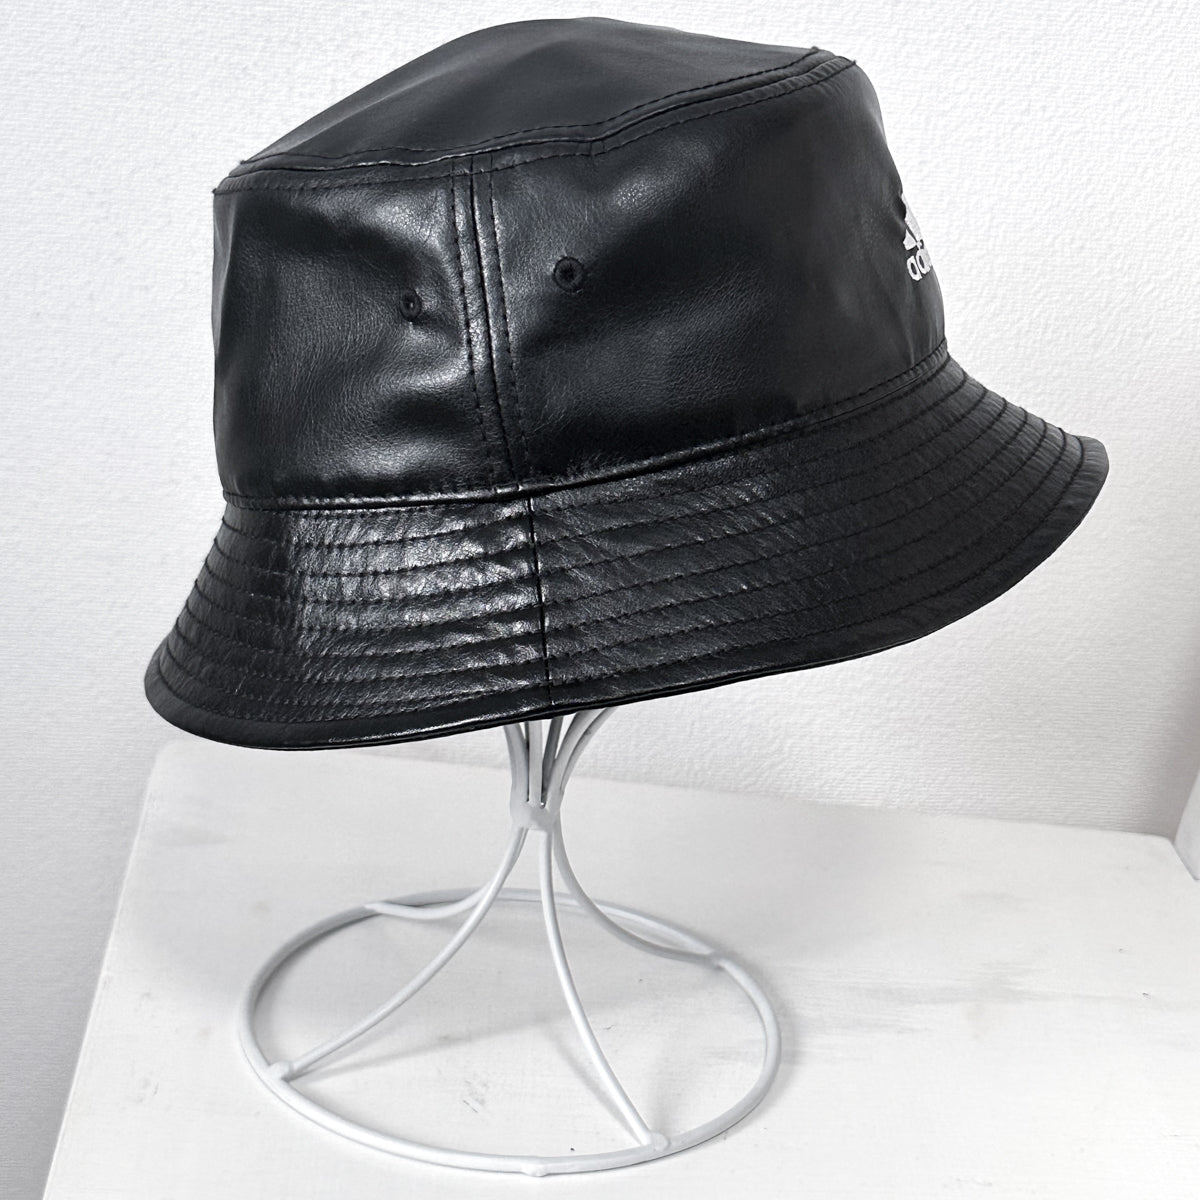 Adidas PU Leather Bucket Hat Black - YOUAREMYPOISON